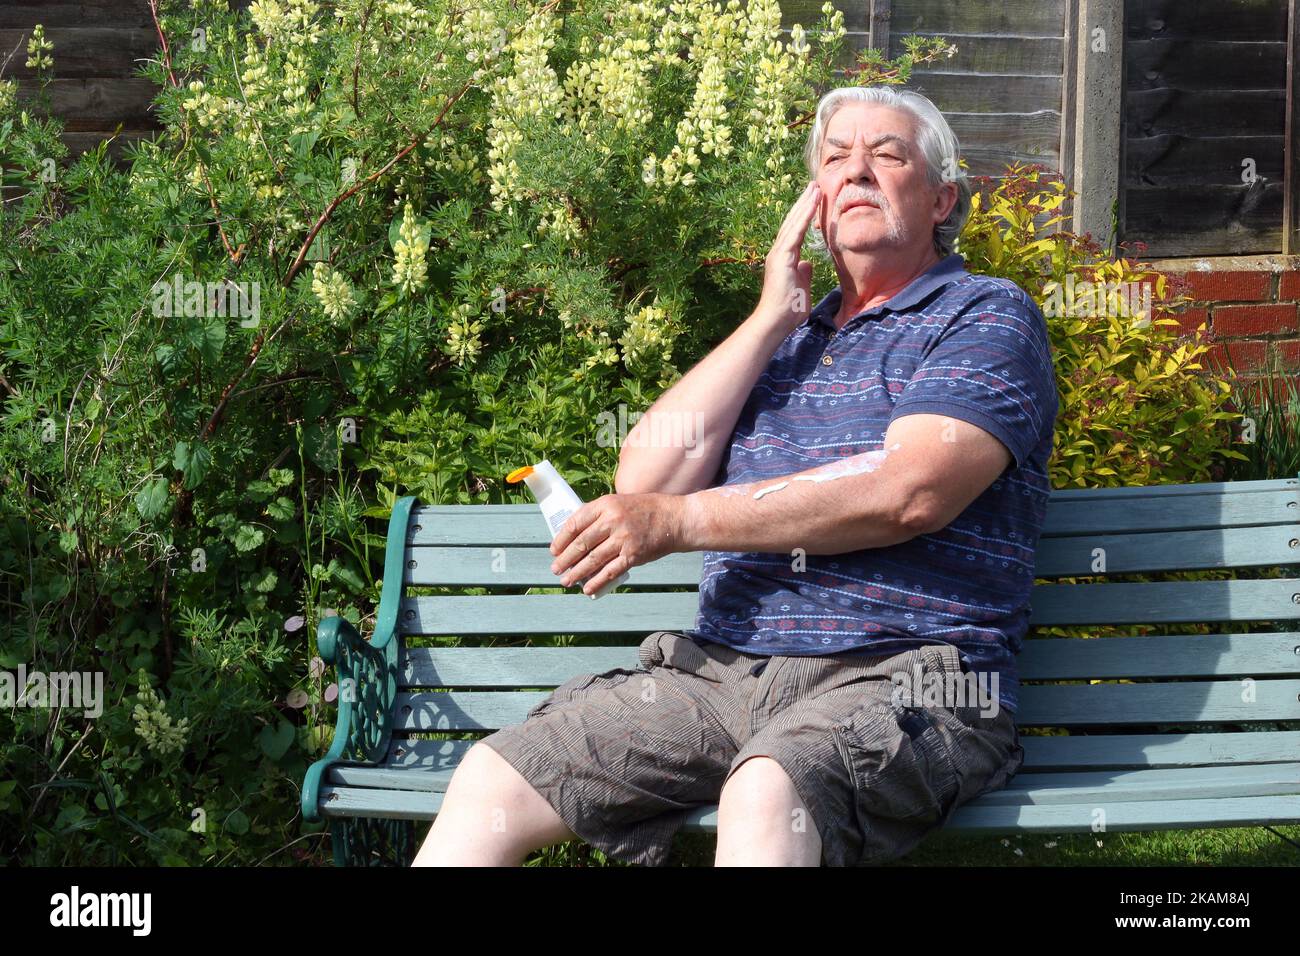 Senior or elderly man applying sun cream or blocker to his face. Sitting in the hot sun. Prevention from sunburn. Stock Photo